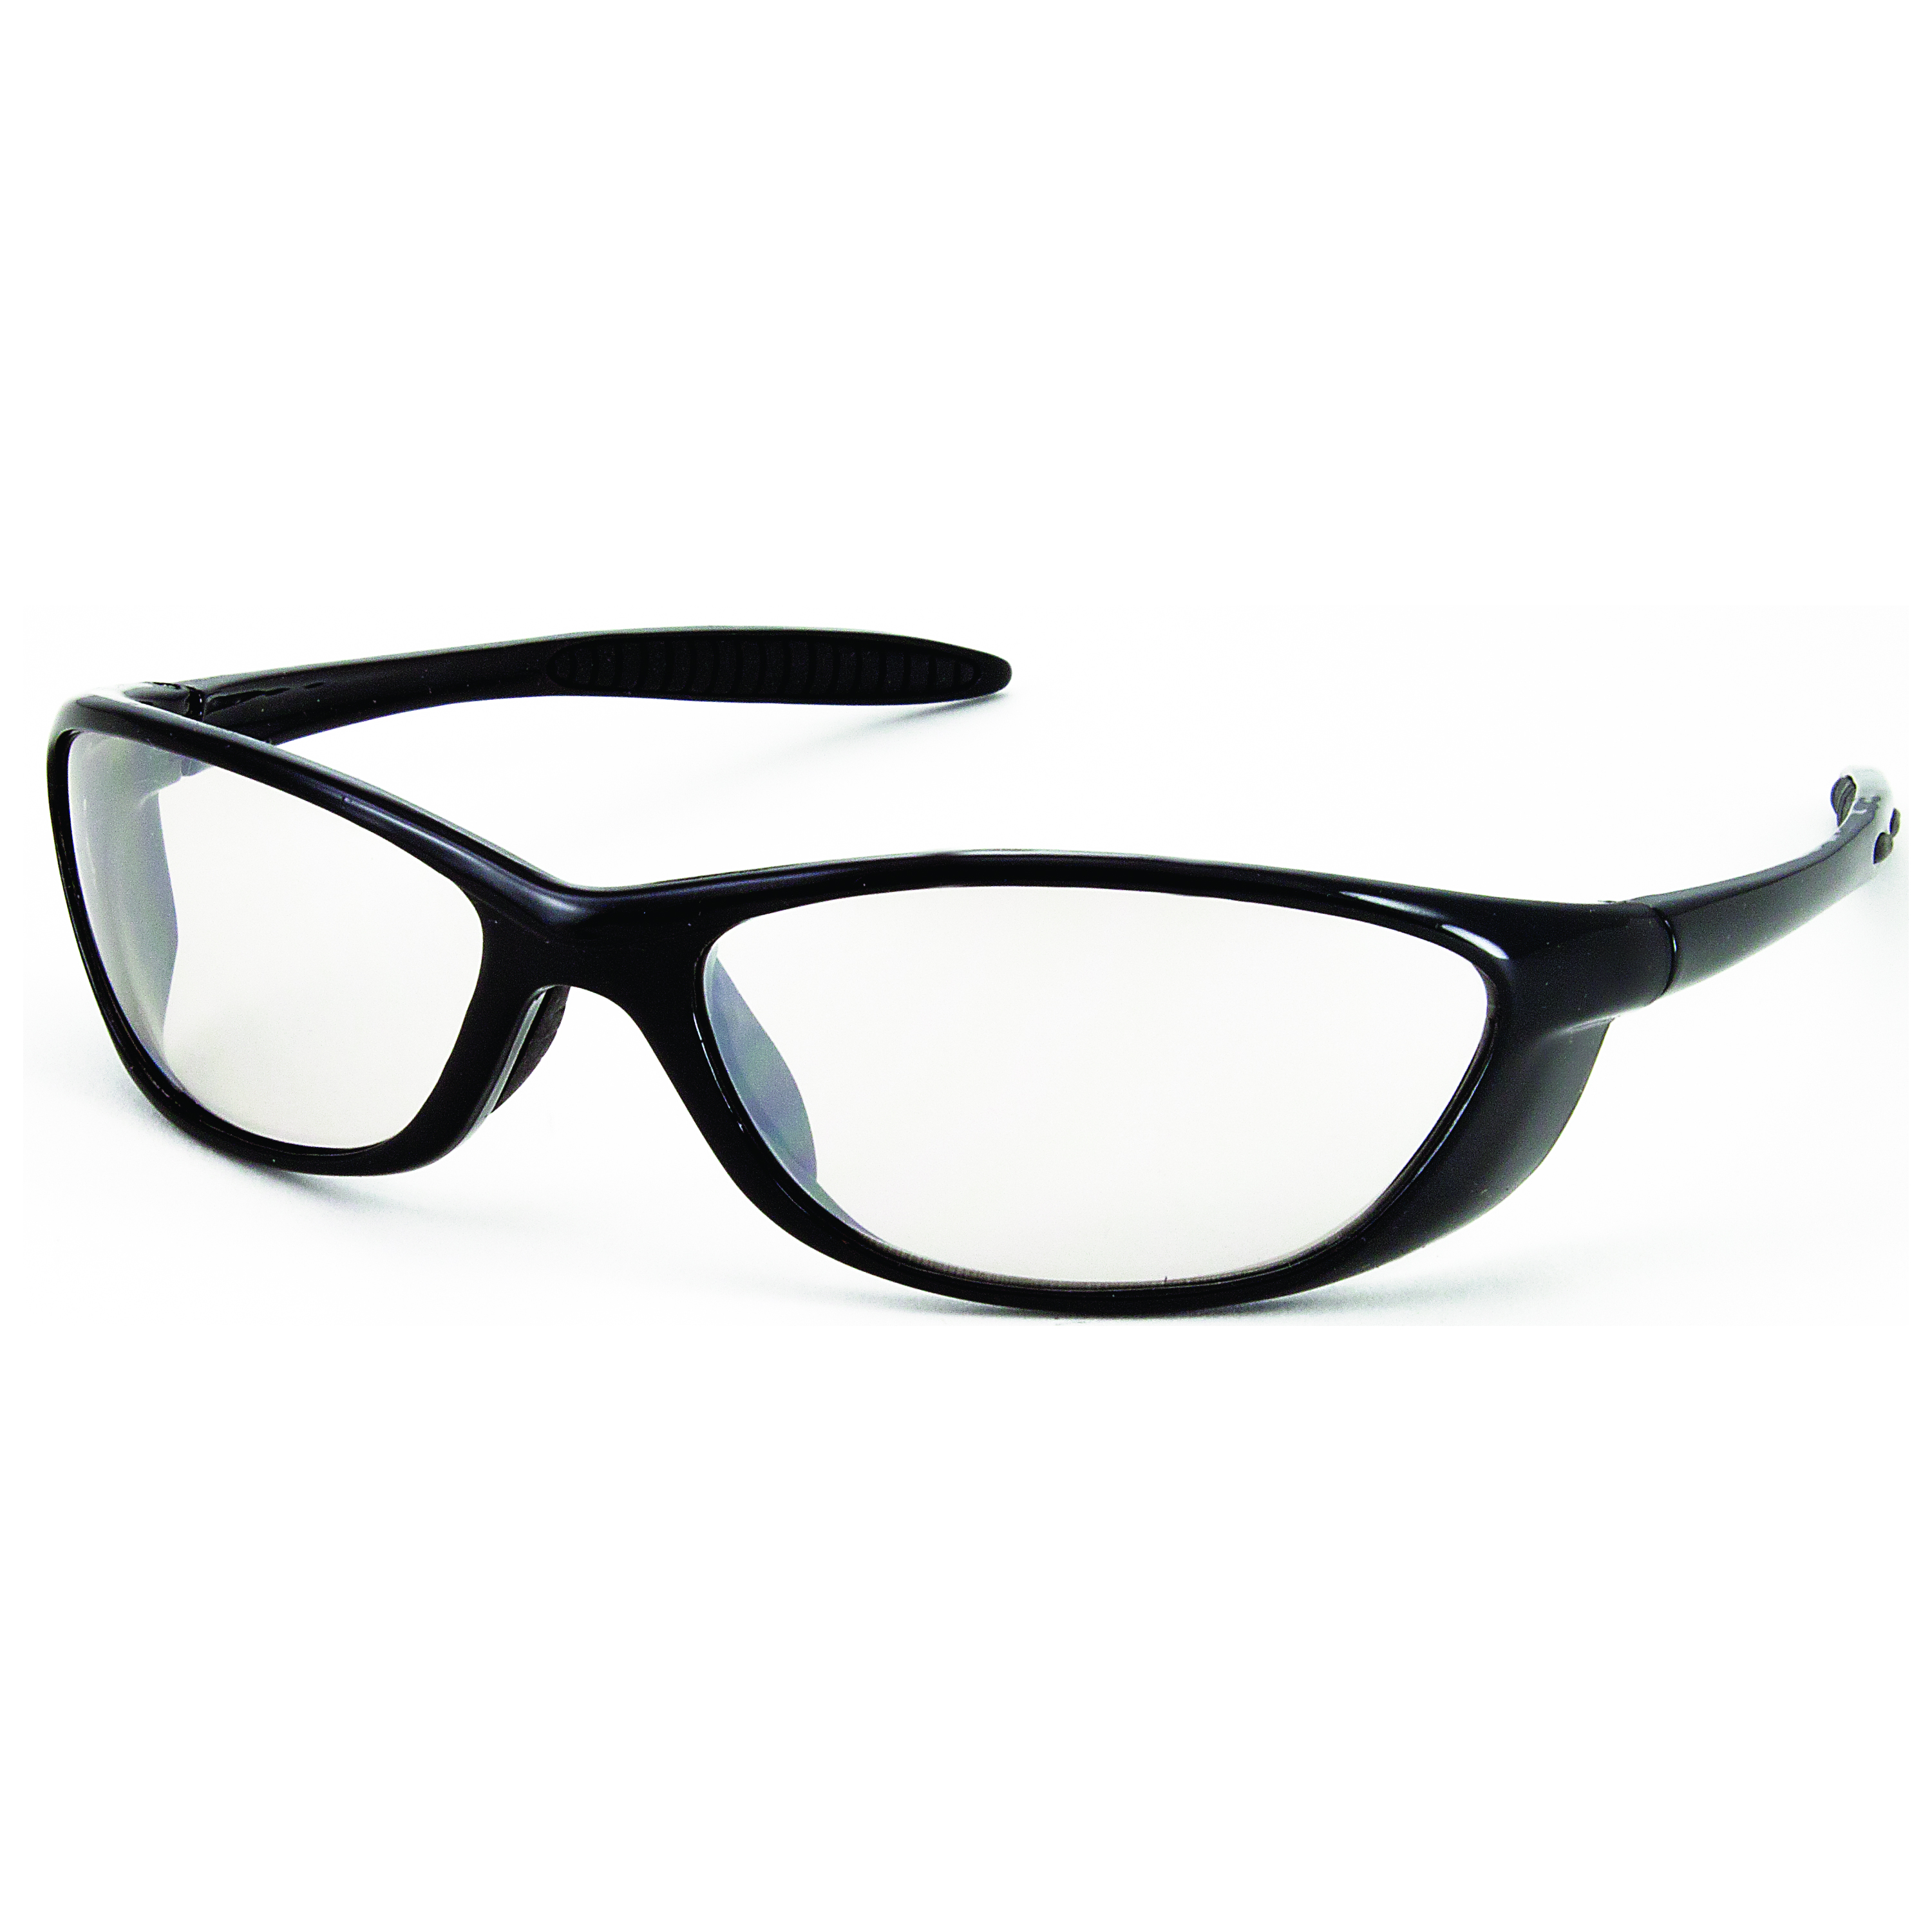 Spyder Sport Safety Glasses Black Gloss Frame w/ Clear Lens